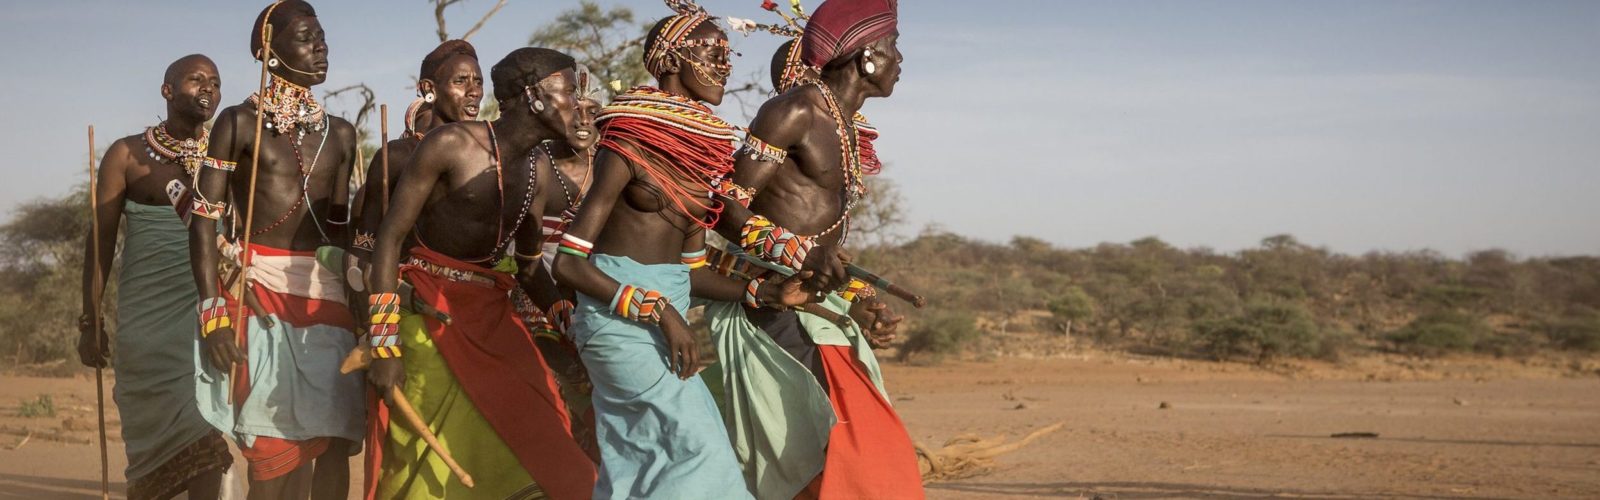 sasaab-samburu-tribe-dance